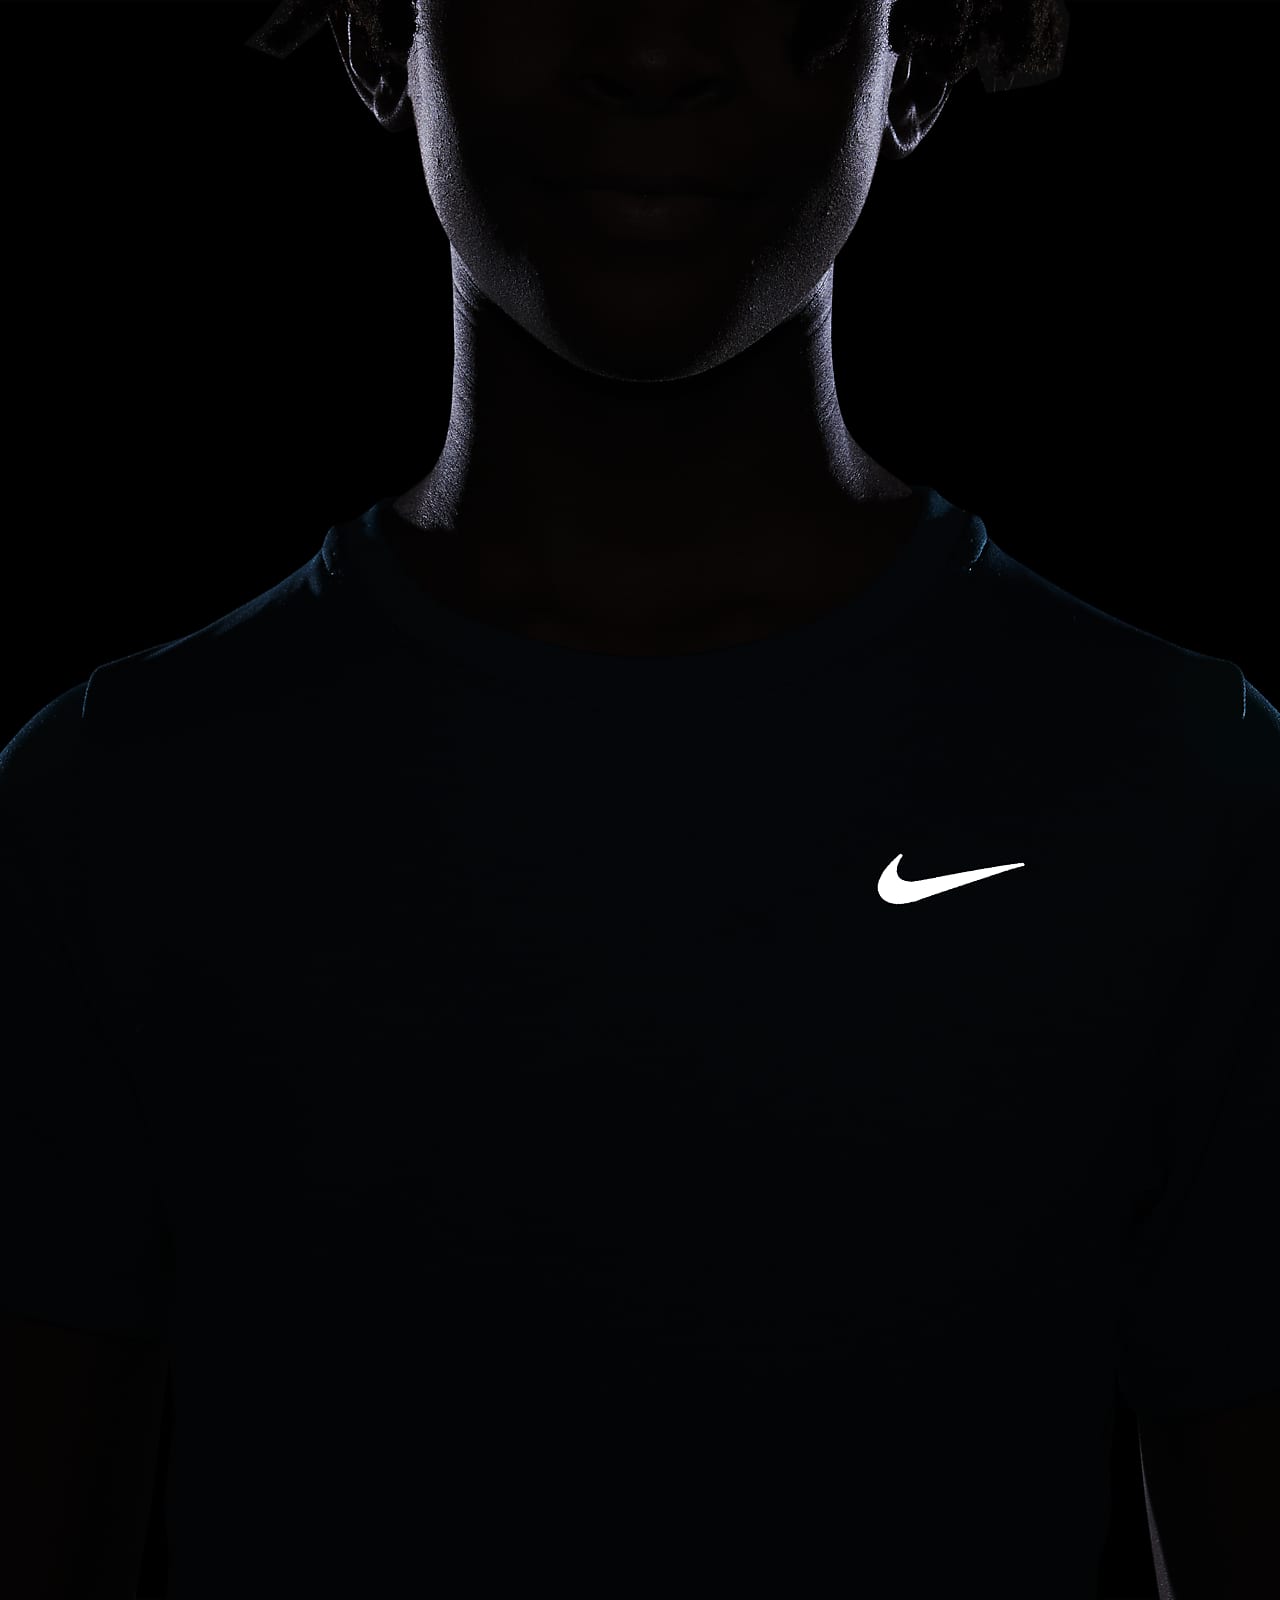 (Boys\') ID Training Kids\' Dri-FIT Nike Top. Miler Short-Sleeve Older Nike